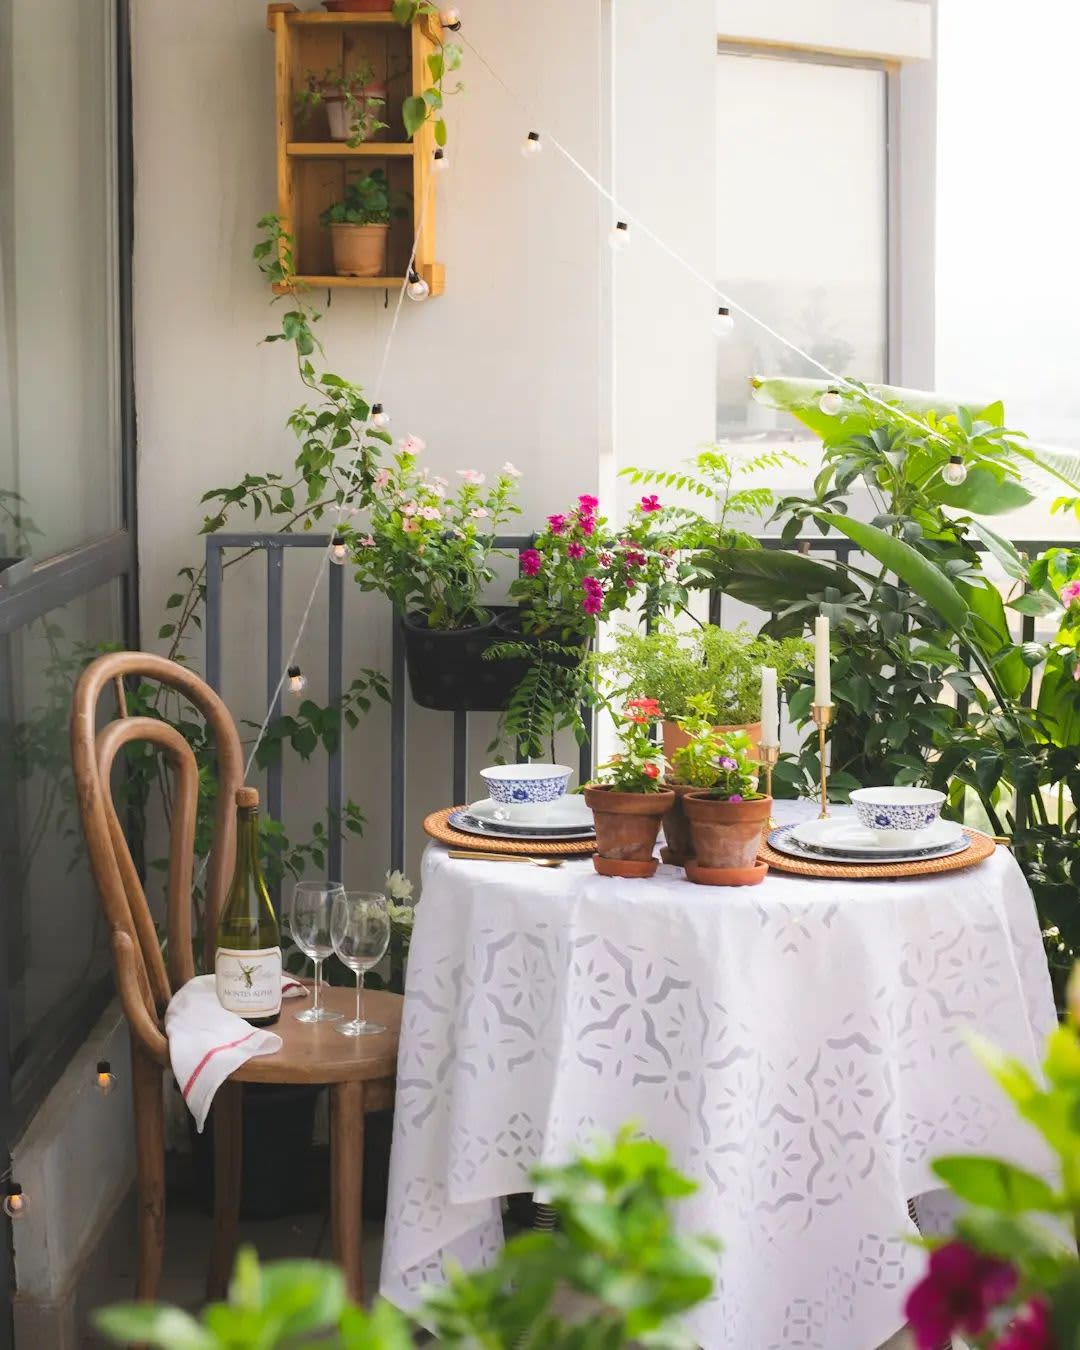 20 balcony garden ideas - how to grow plants on a small balcony